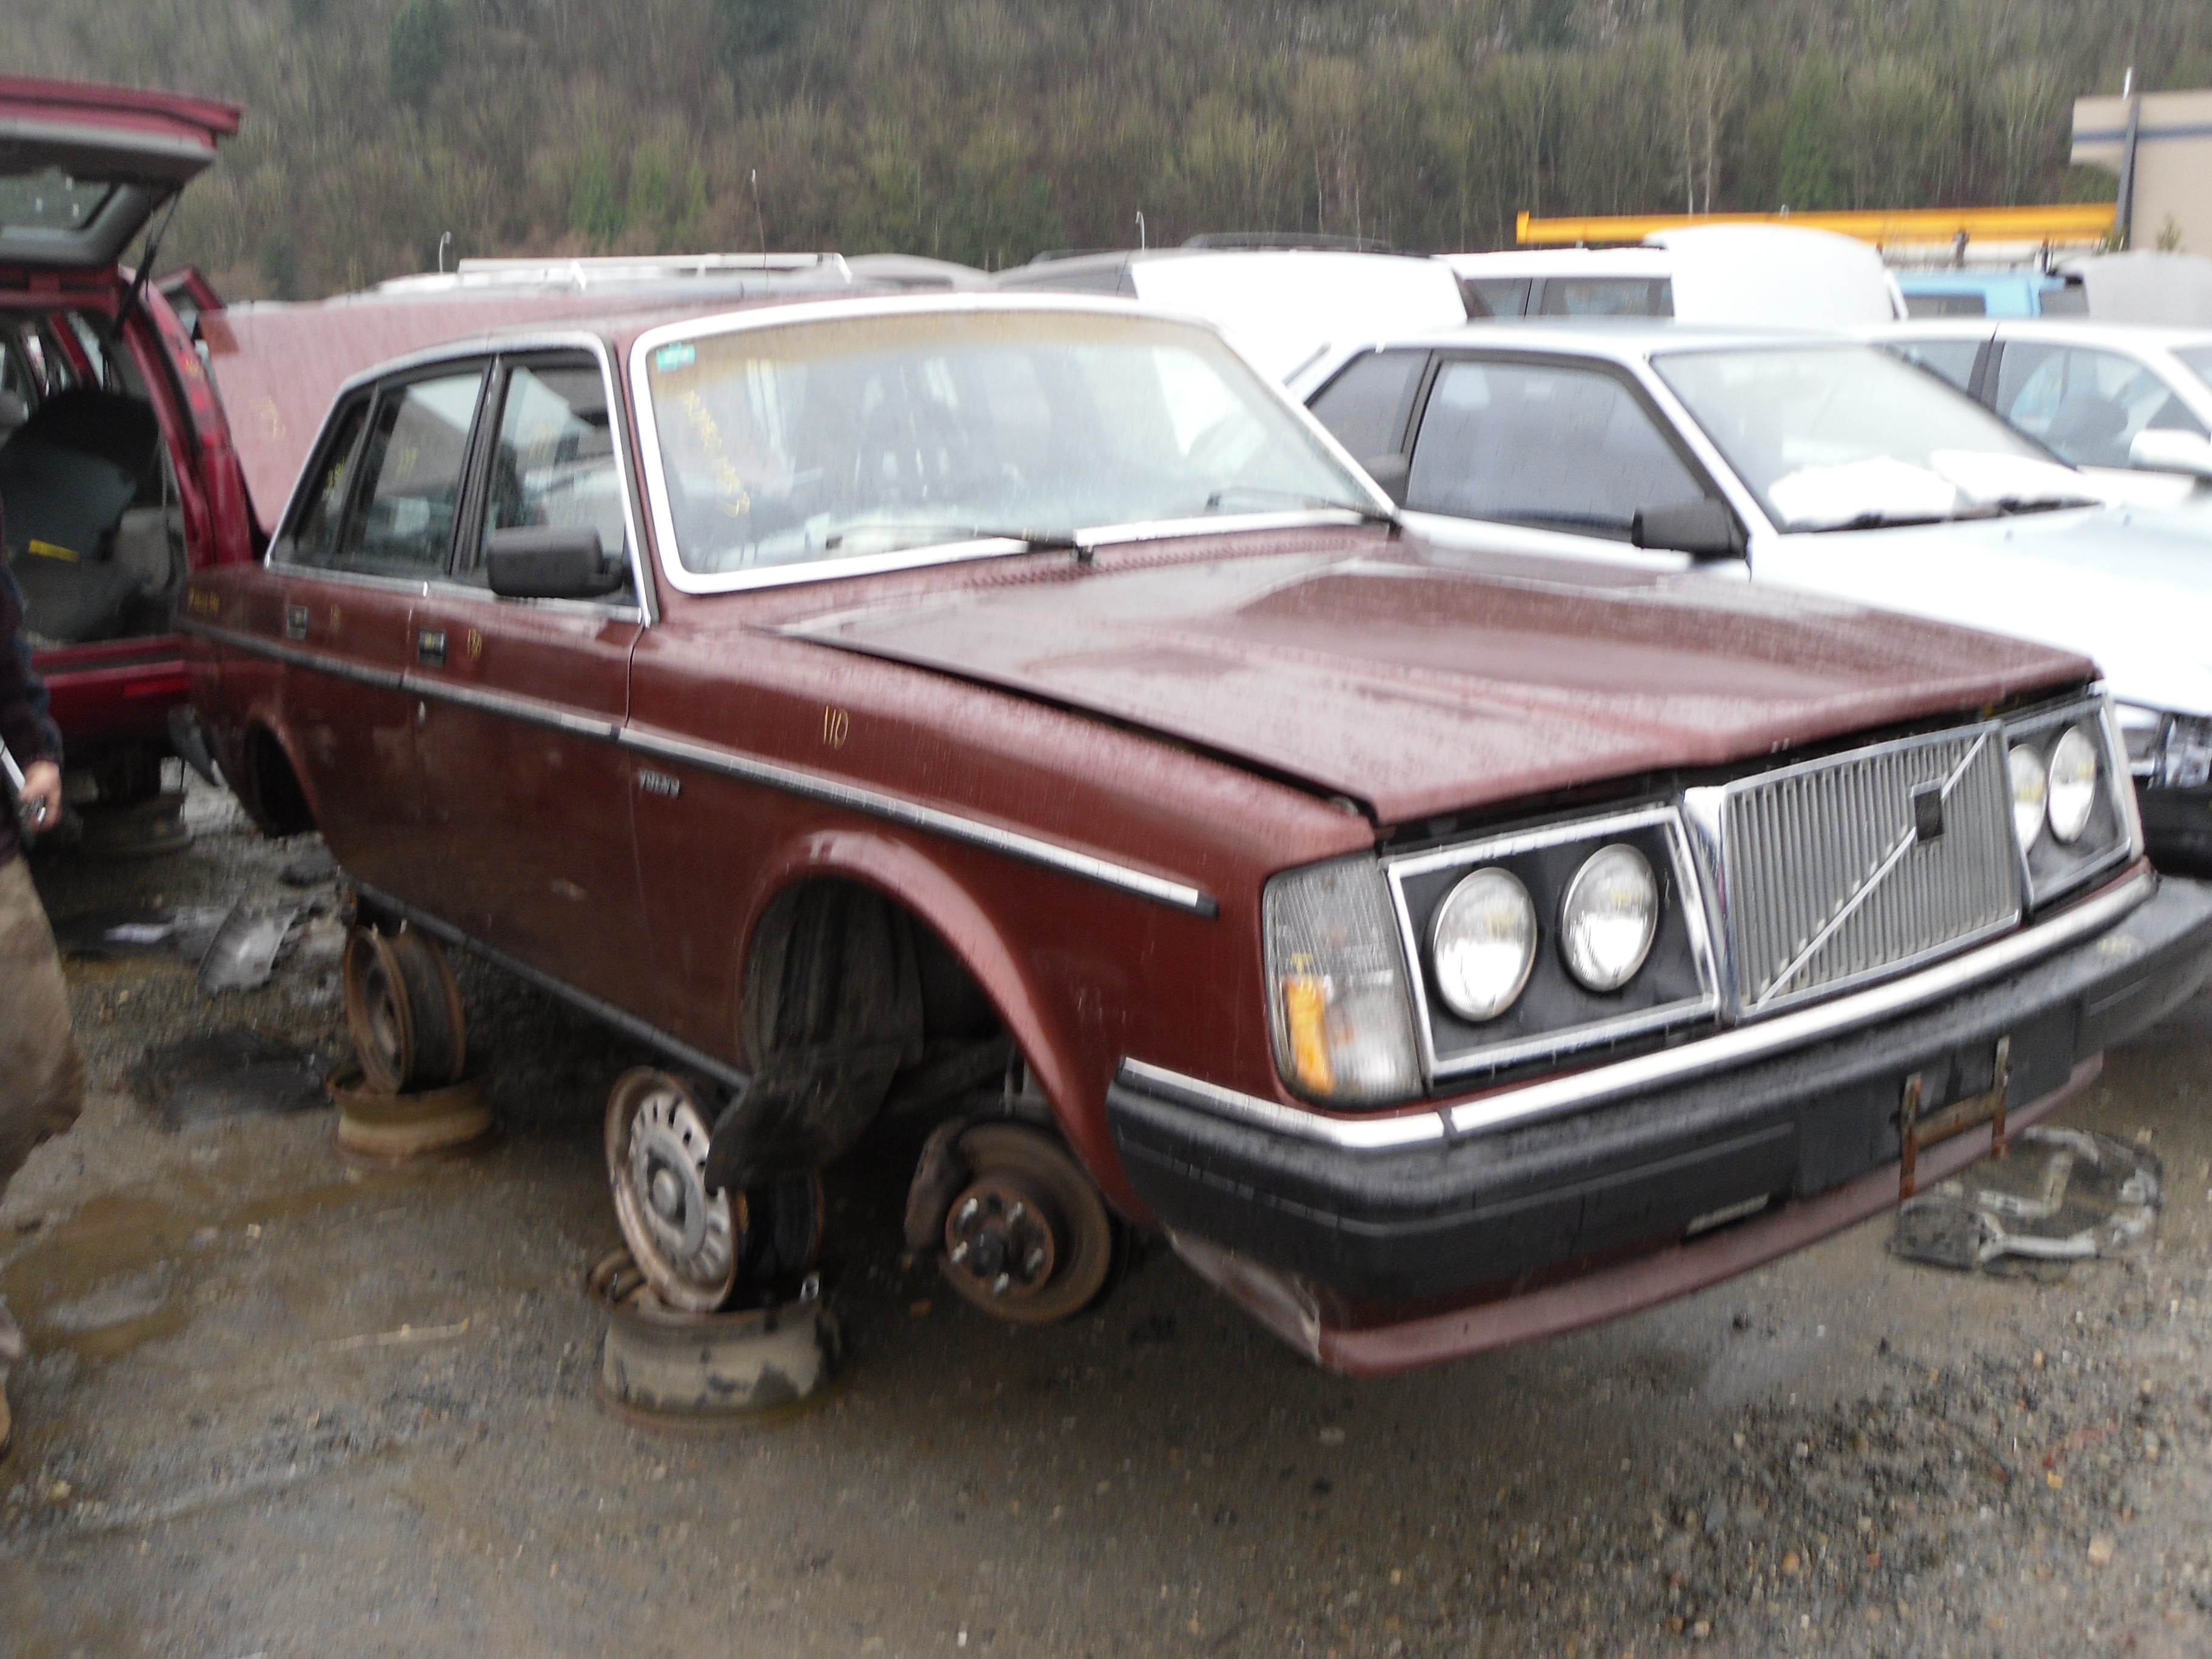 Volvo 244 in BC junkyards 2013 | Flickr - Photo Sharing!